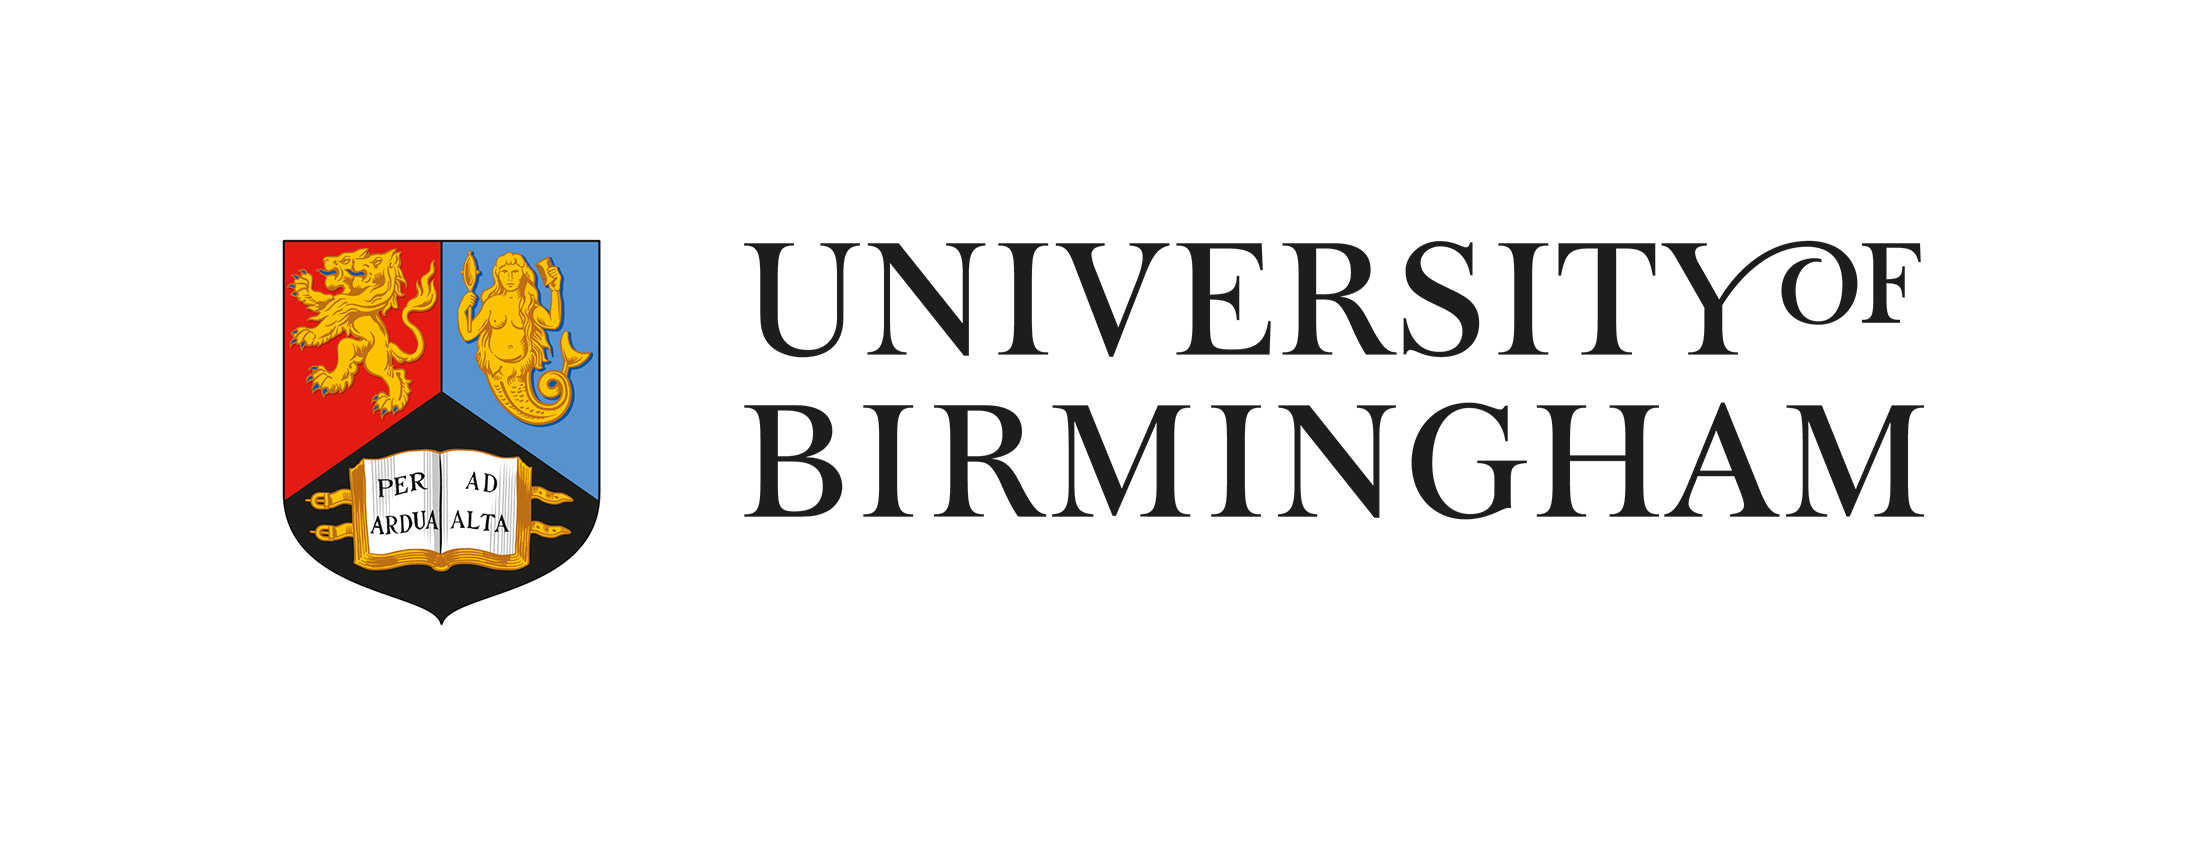 University of Brimingham assignment help